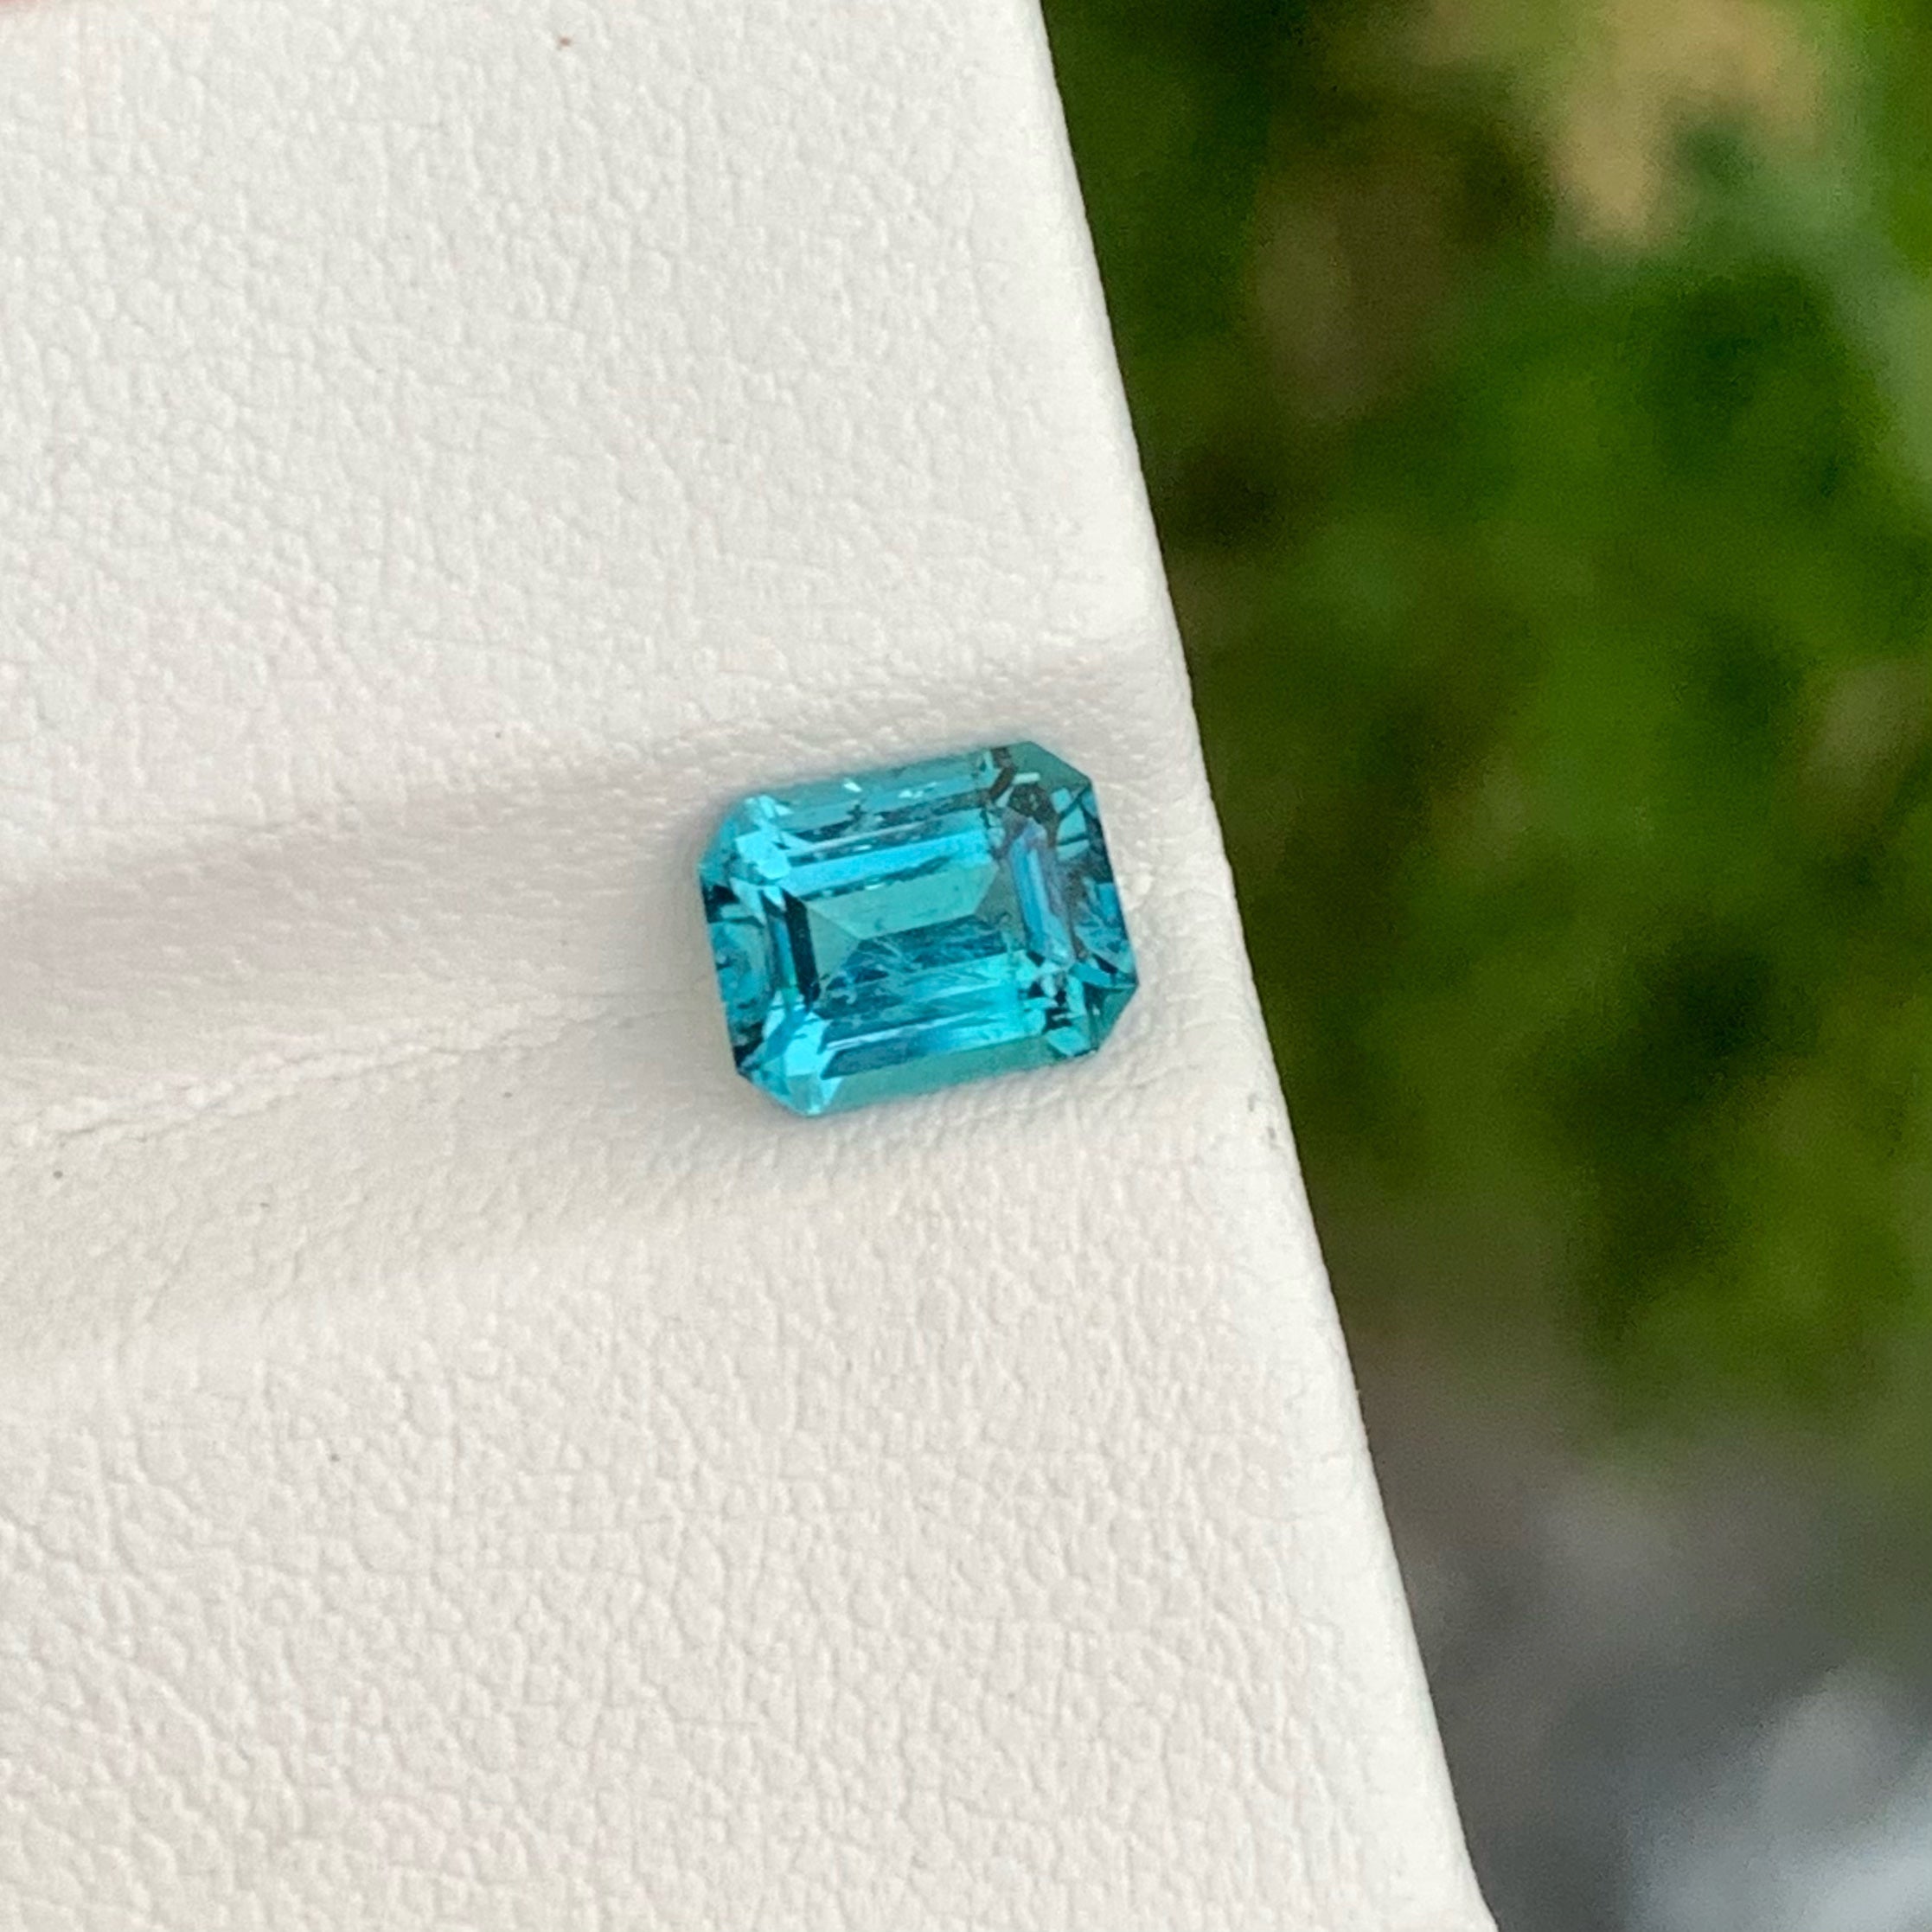 Gorgeous Tiffany Blue Tourmaline 1.65 carats Emerald Cut Natural Afghani Gemstone